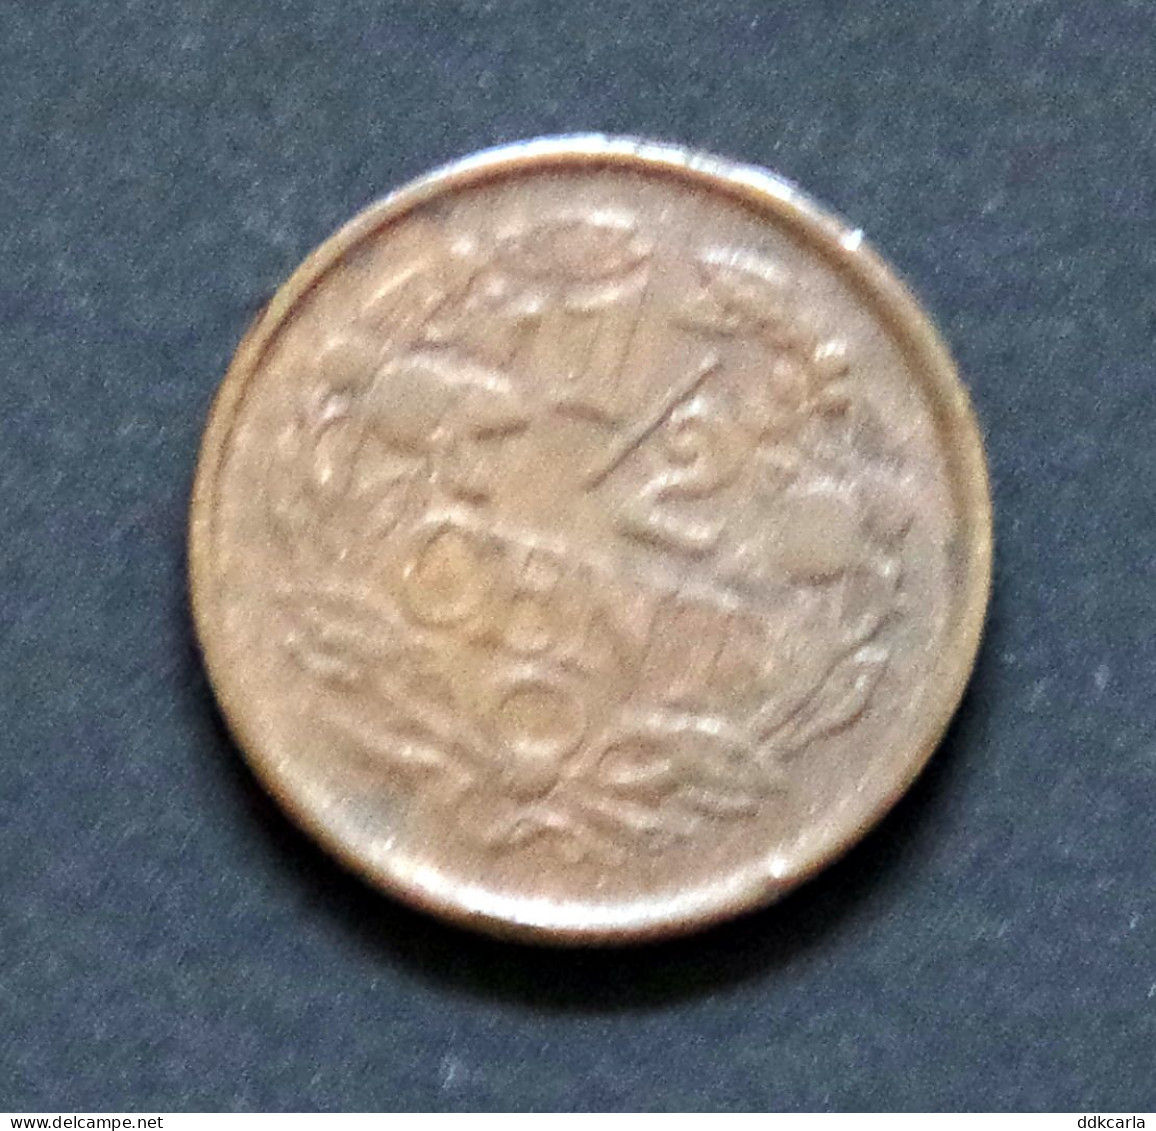 1/2 Cent 1938 - 0.5 Cent